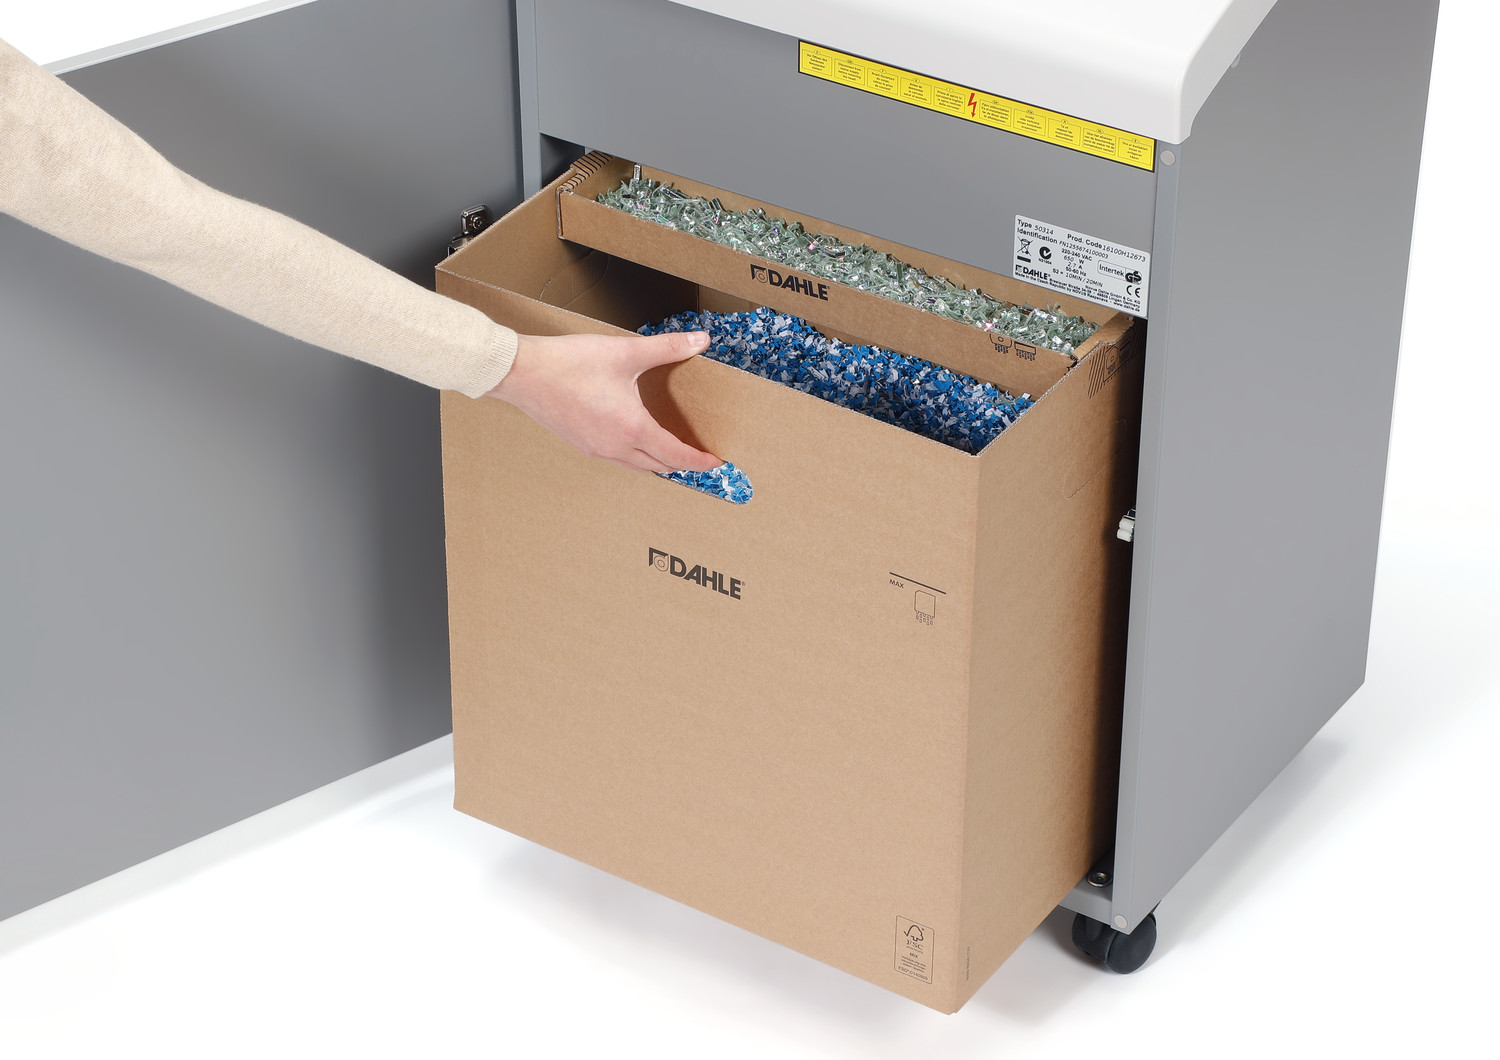 DAHLE waste box for document shredders